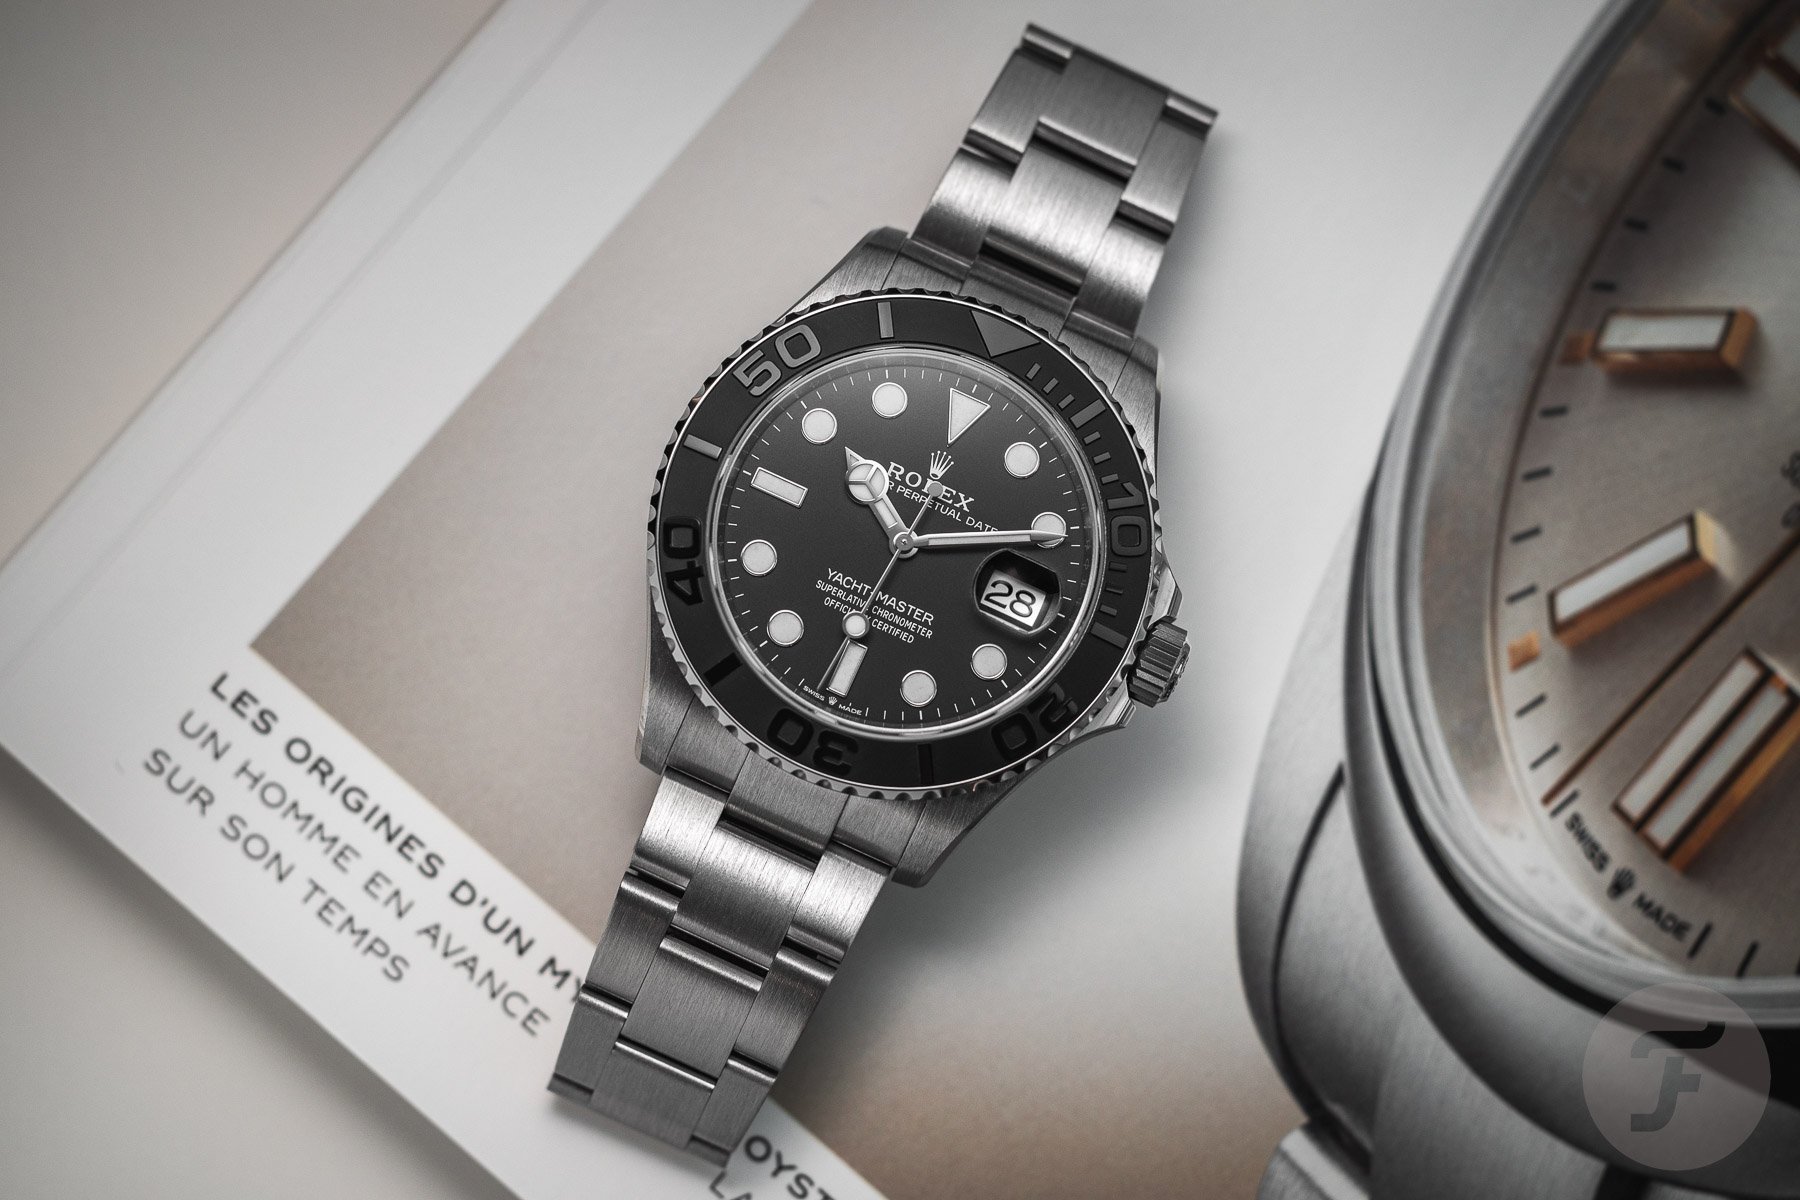 Rolex Retains Top Spot as #1 Swiss Watchmaker in 2020